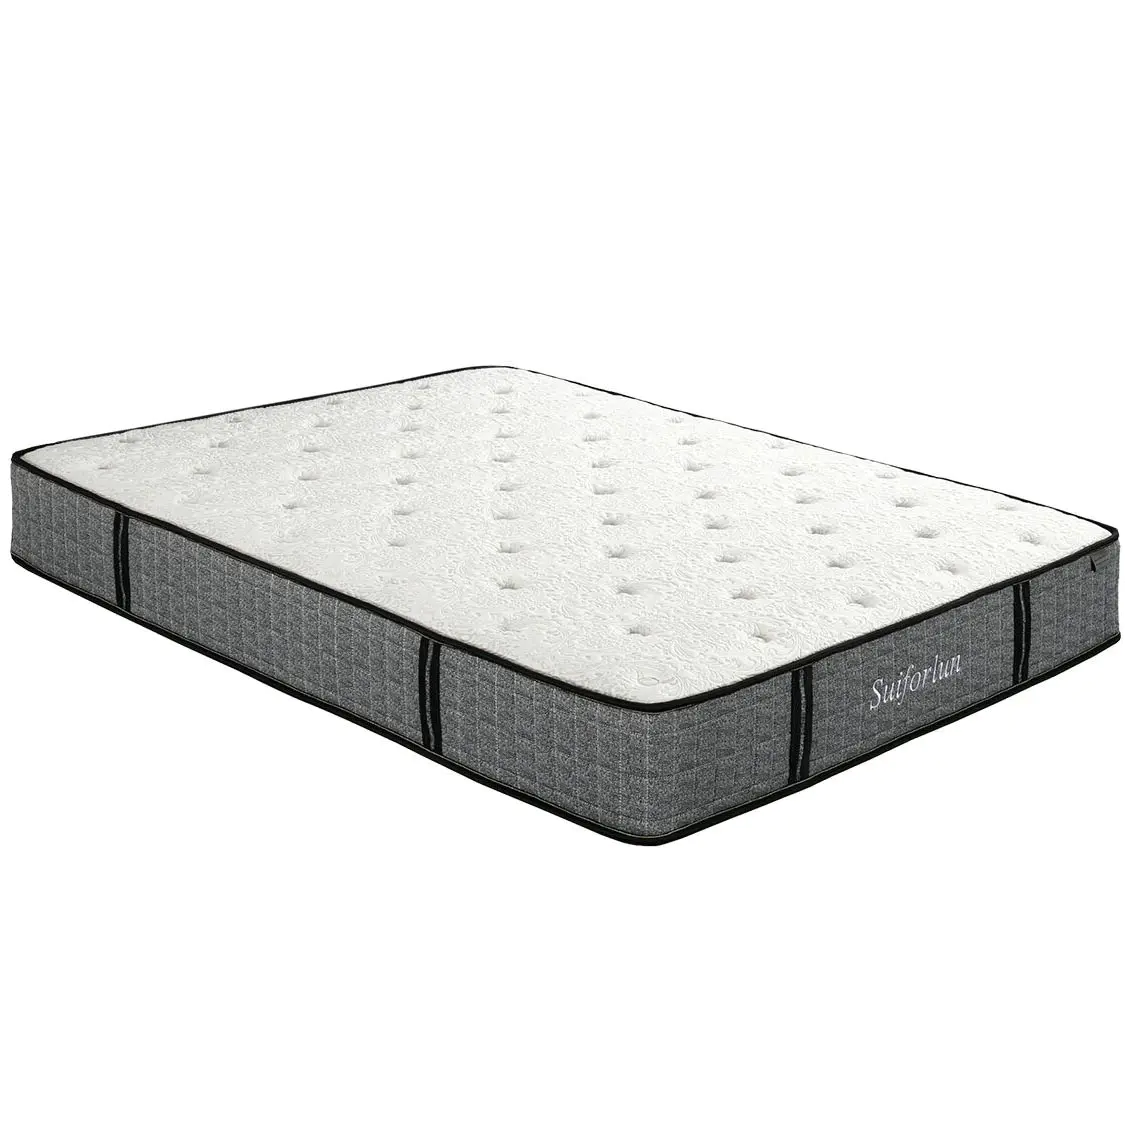 Suiforlun mattress stable gel hybrid mattress series for home